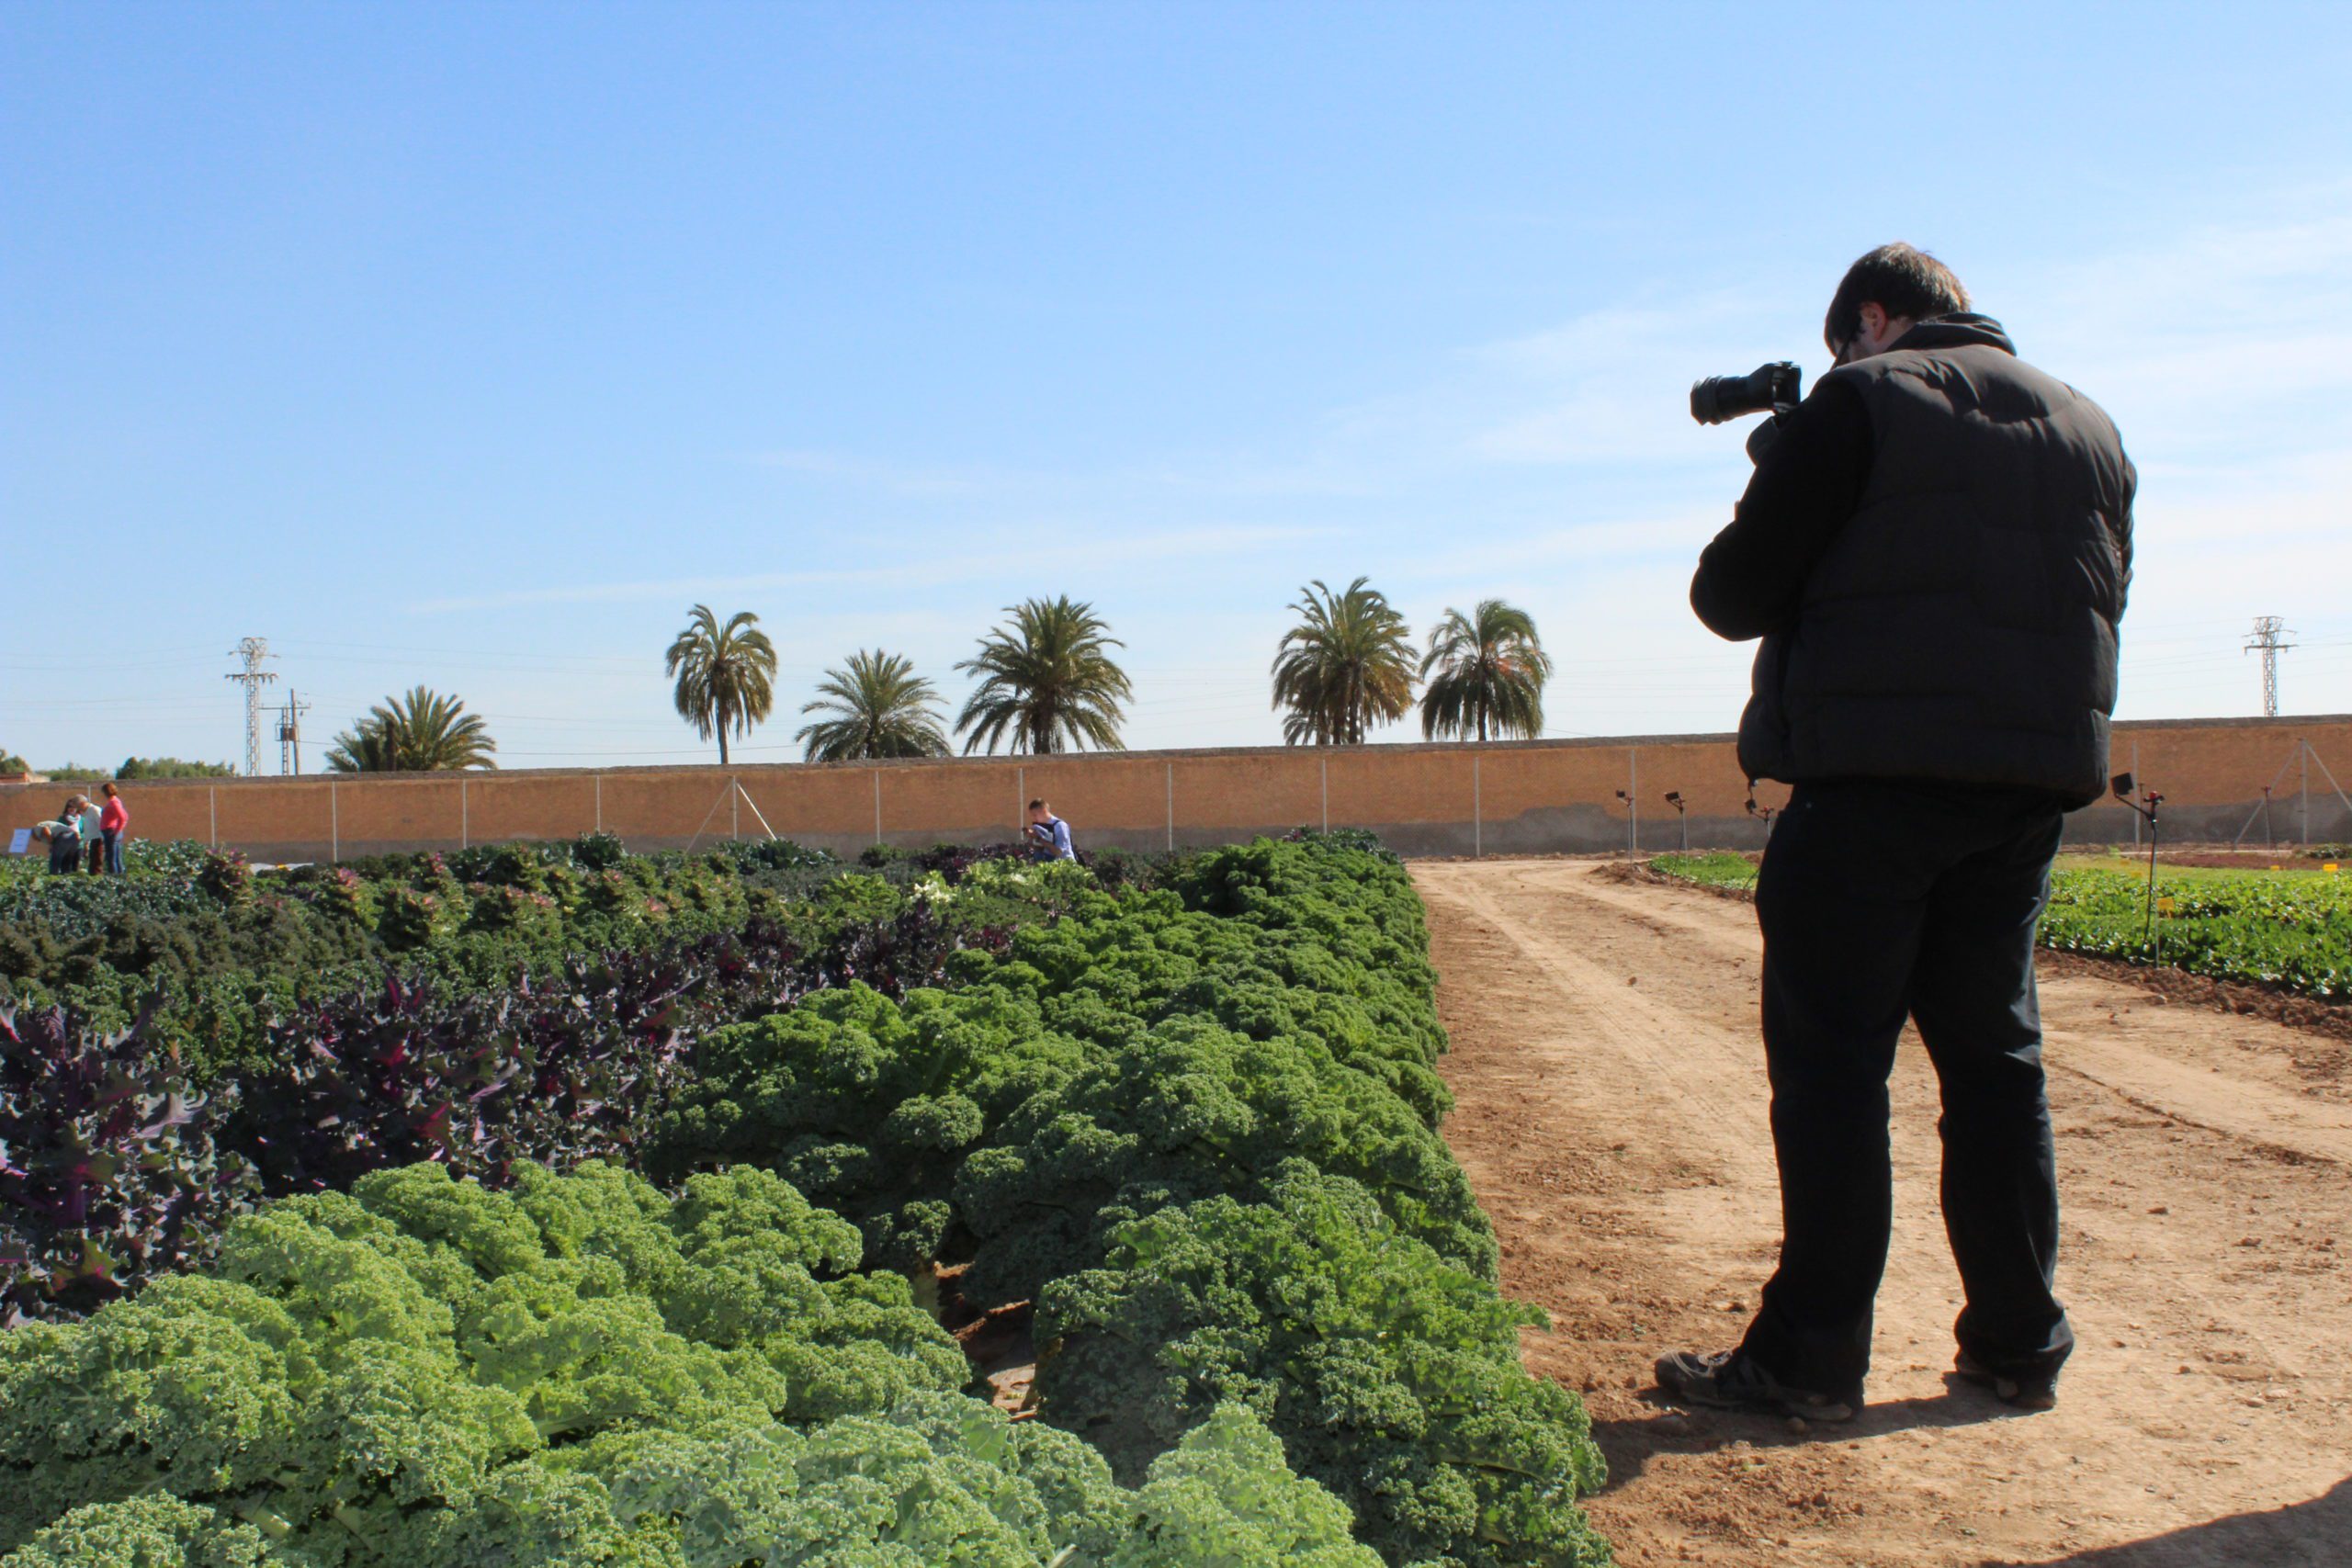 Kale in the trial fields of Cartagena, Spain